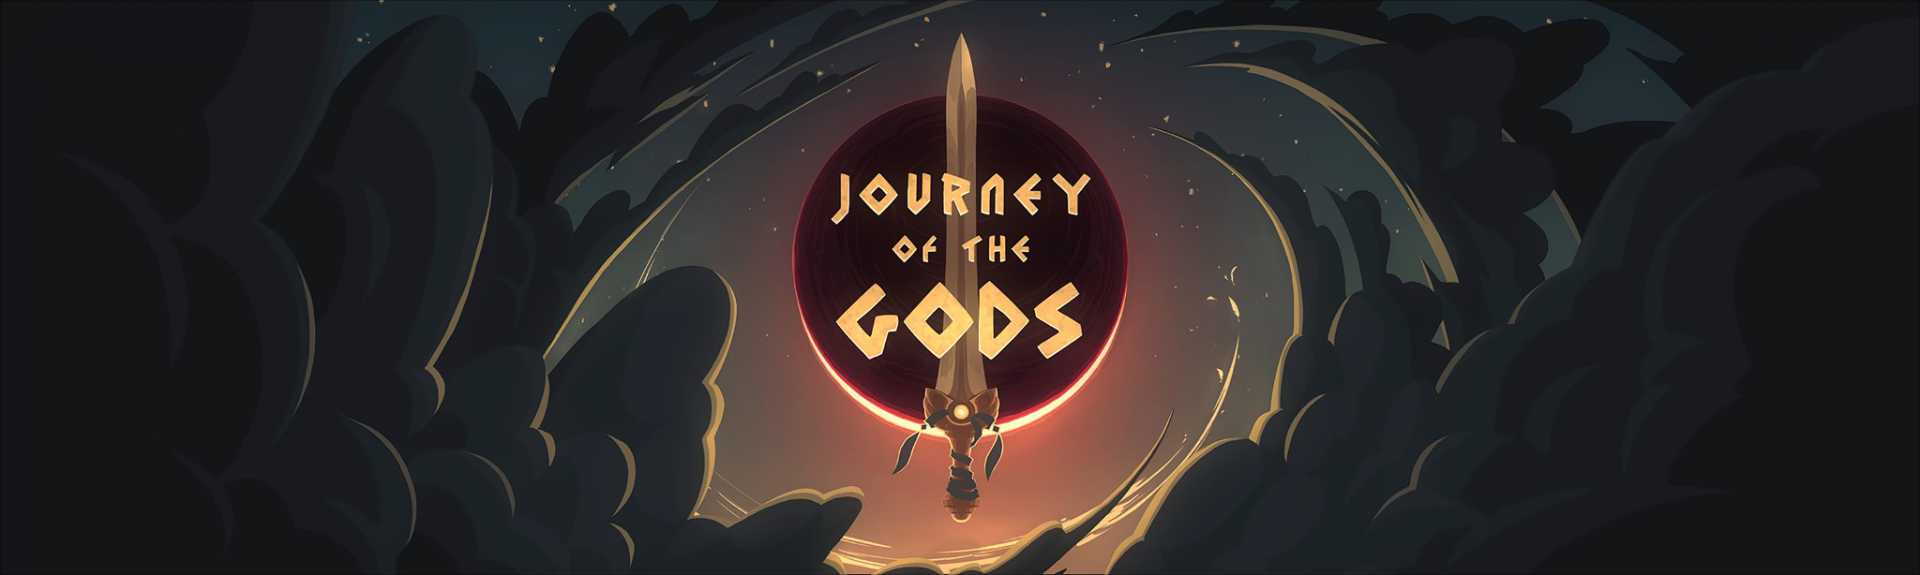 Journey of the Gods